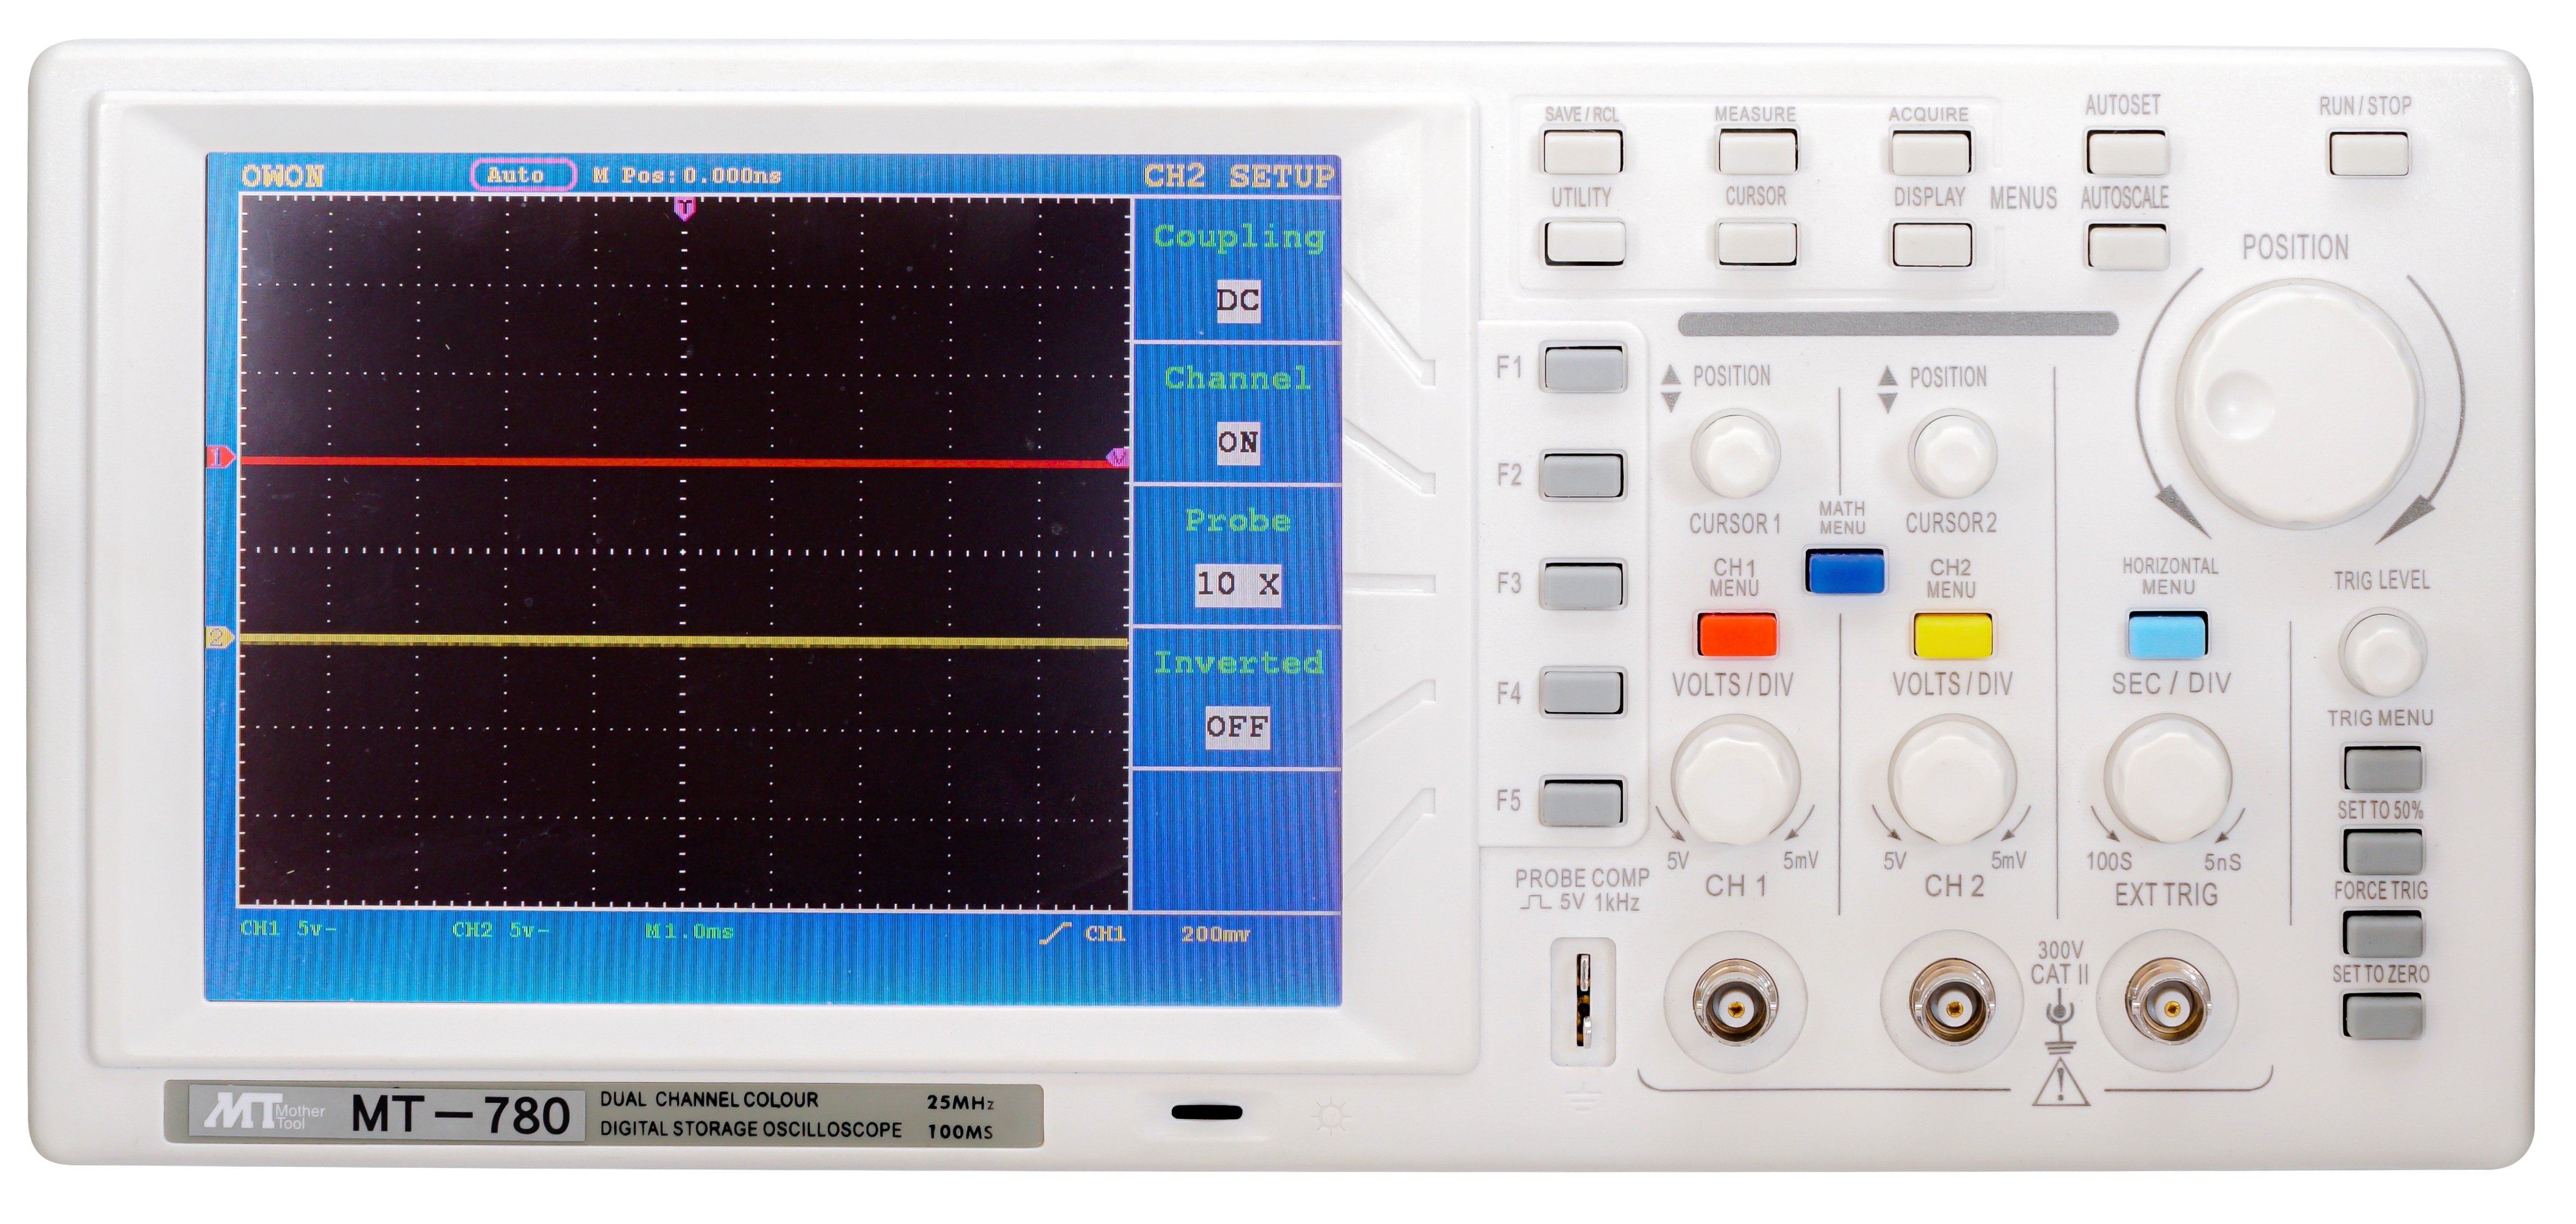 Digital oscilloscope MT-780 